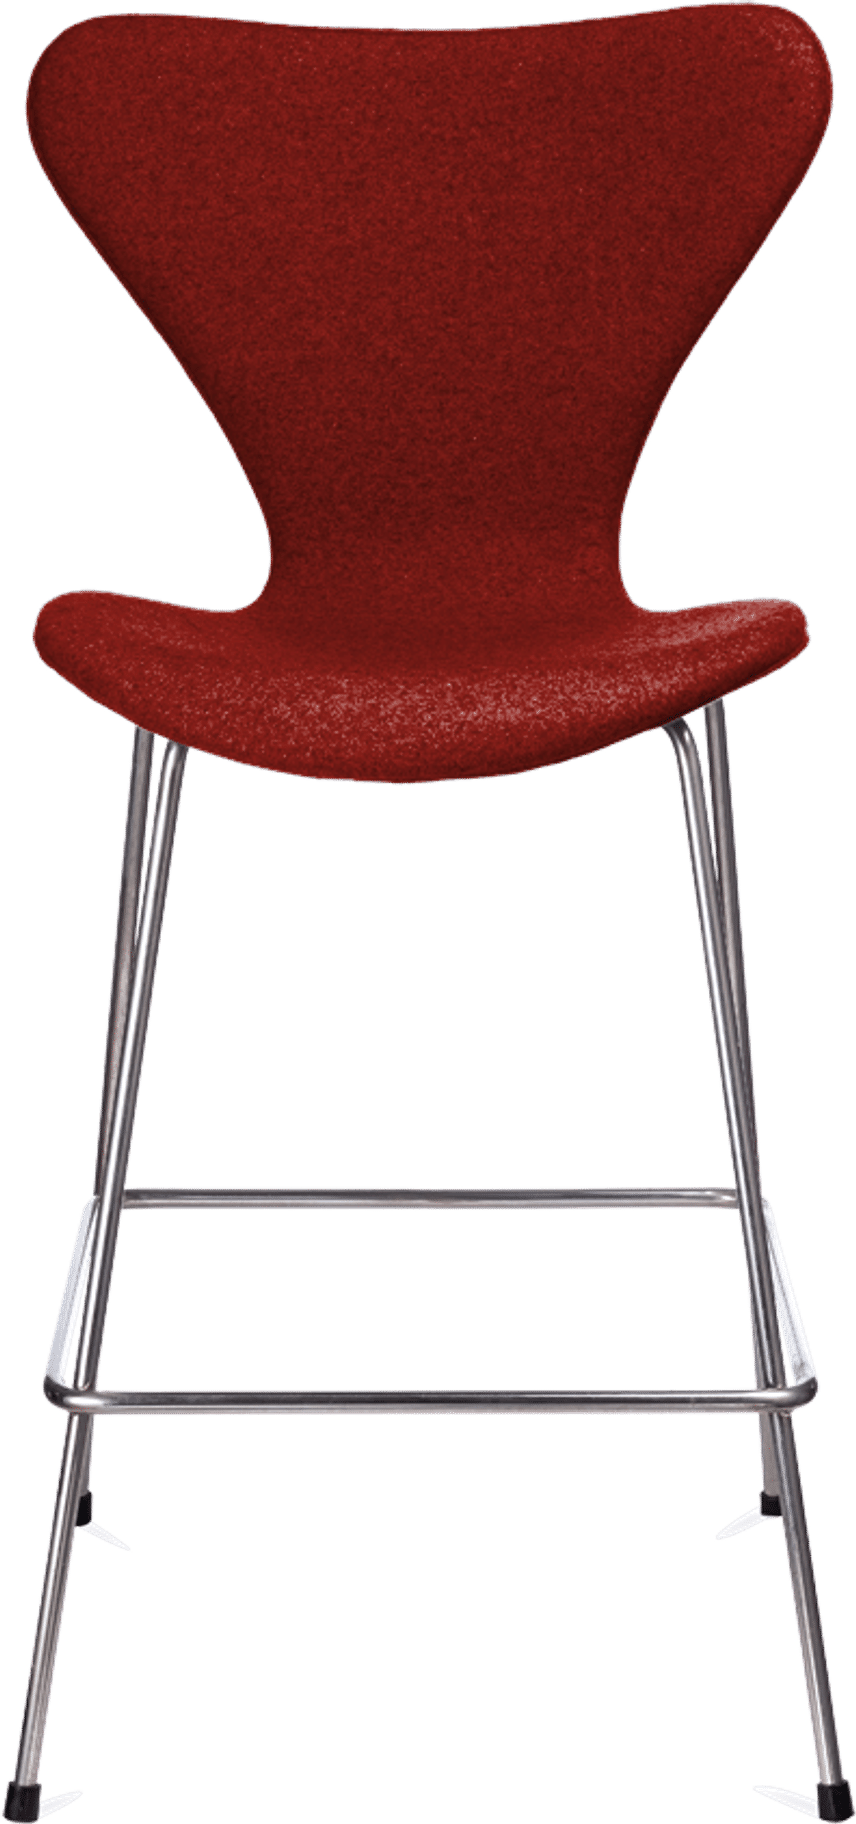 Series 7 Barstool Upholstered Red image.